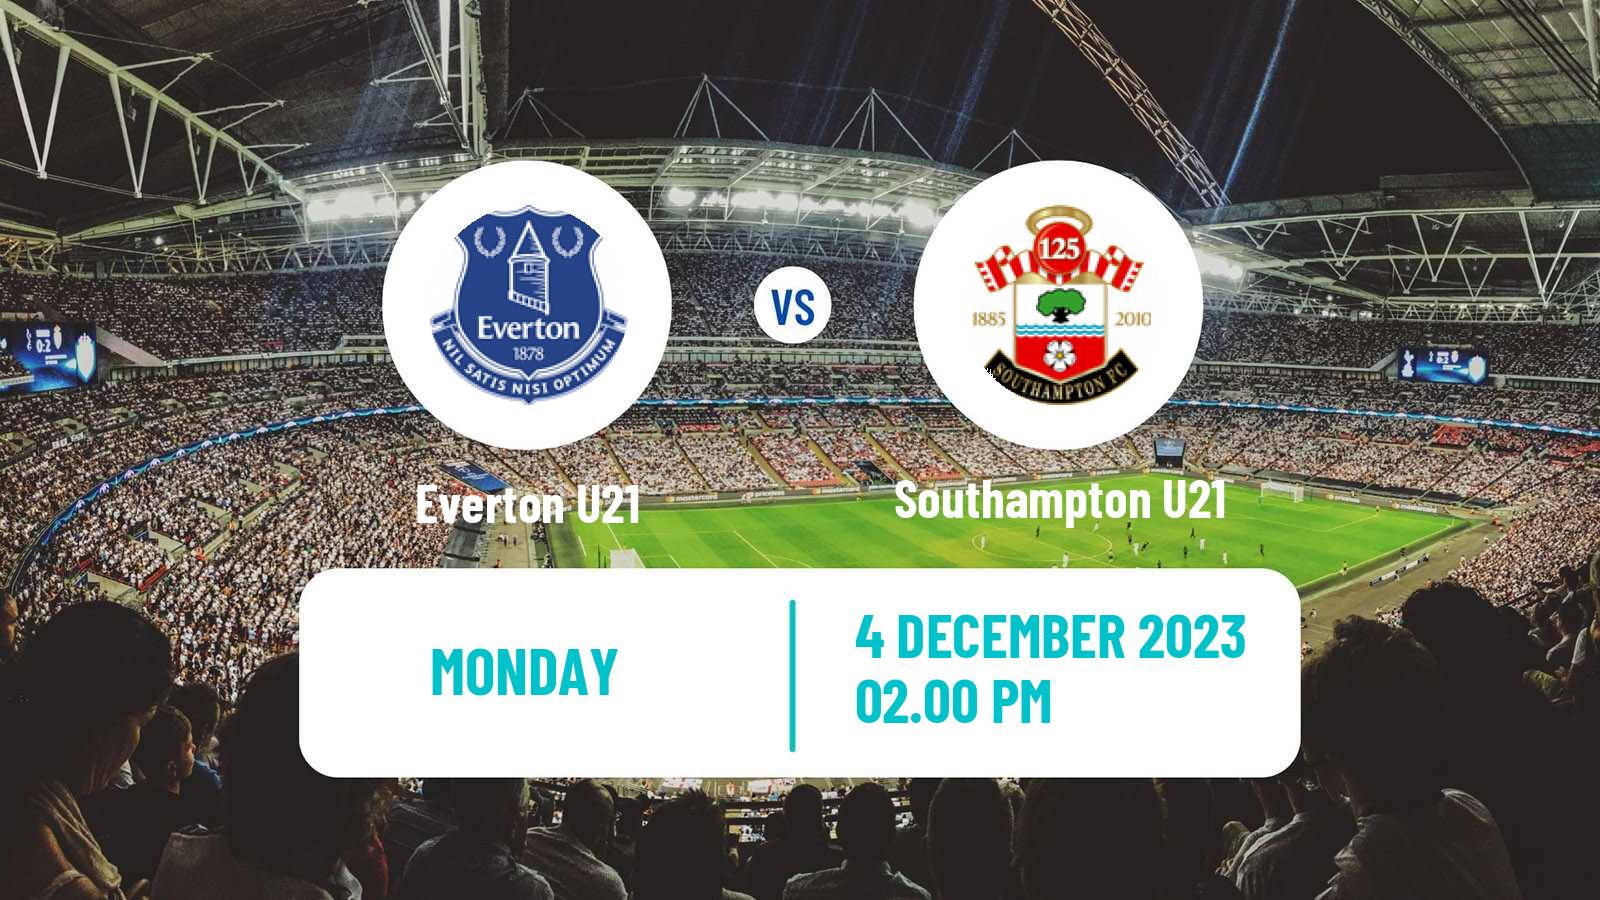 Soccer English Premier League 2 Everton U21 - Southampton U21